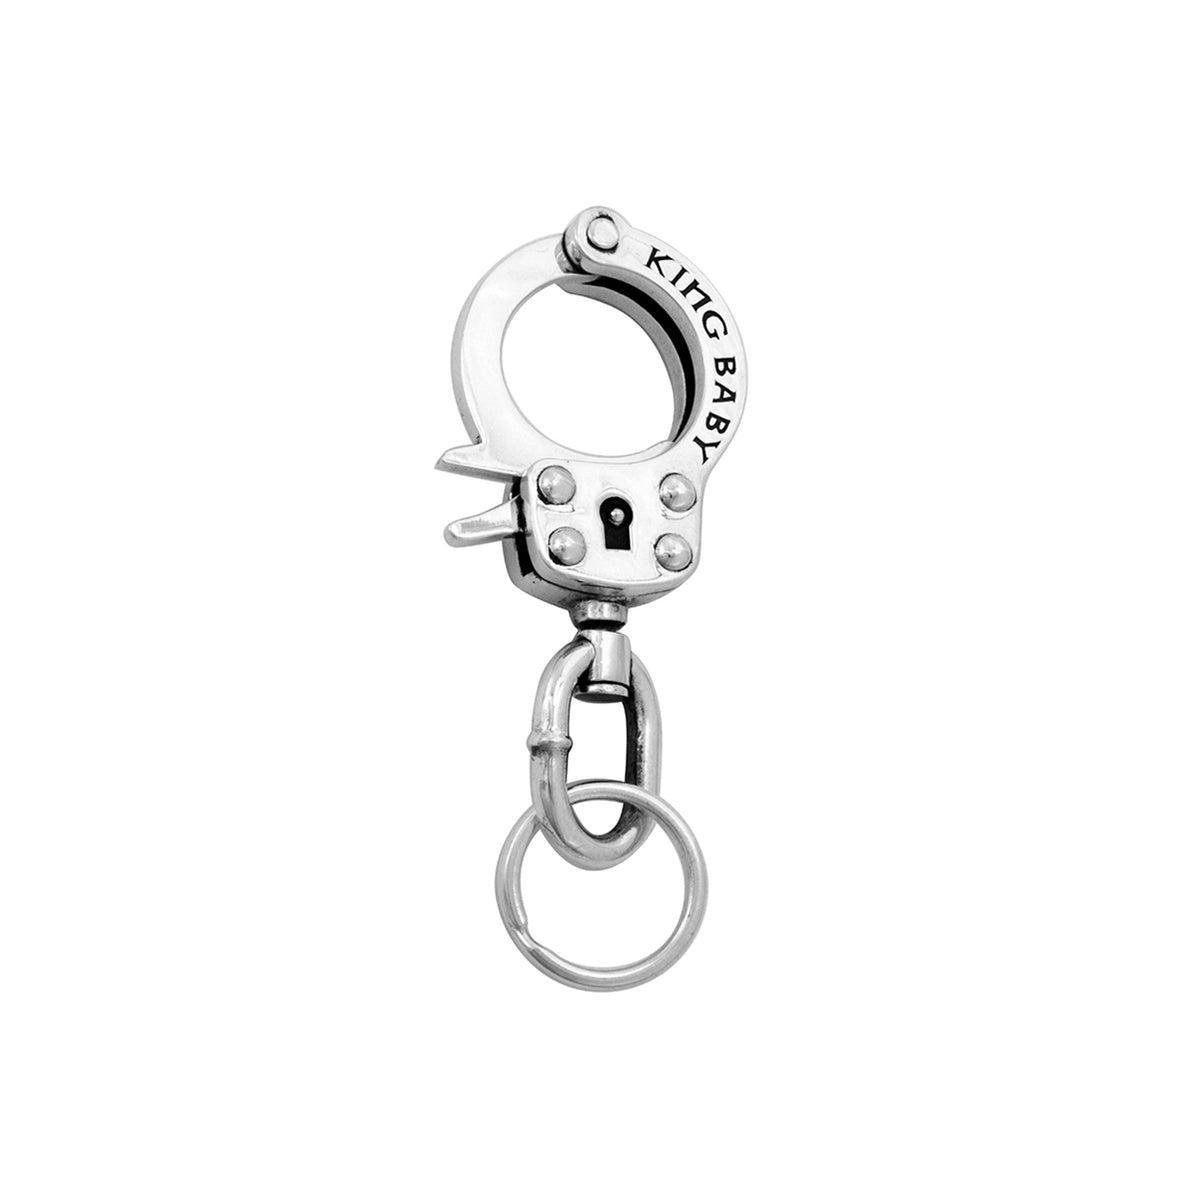 YEUHTLL 10 Pcs Gold/Silver Keychain Hooks with Key Rings Keychain